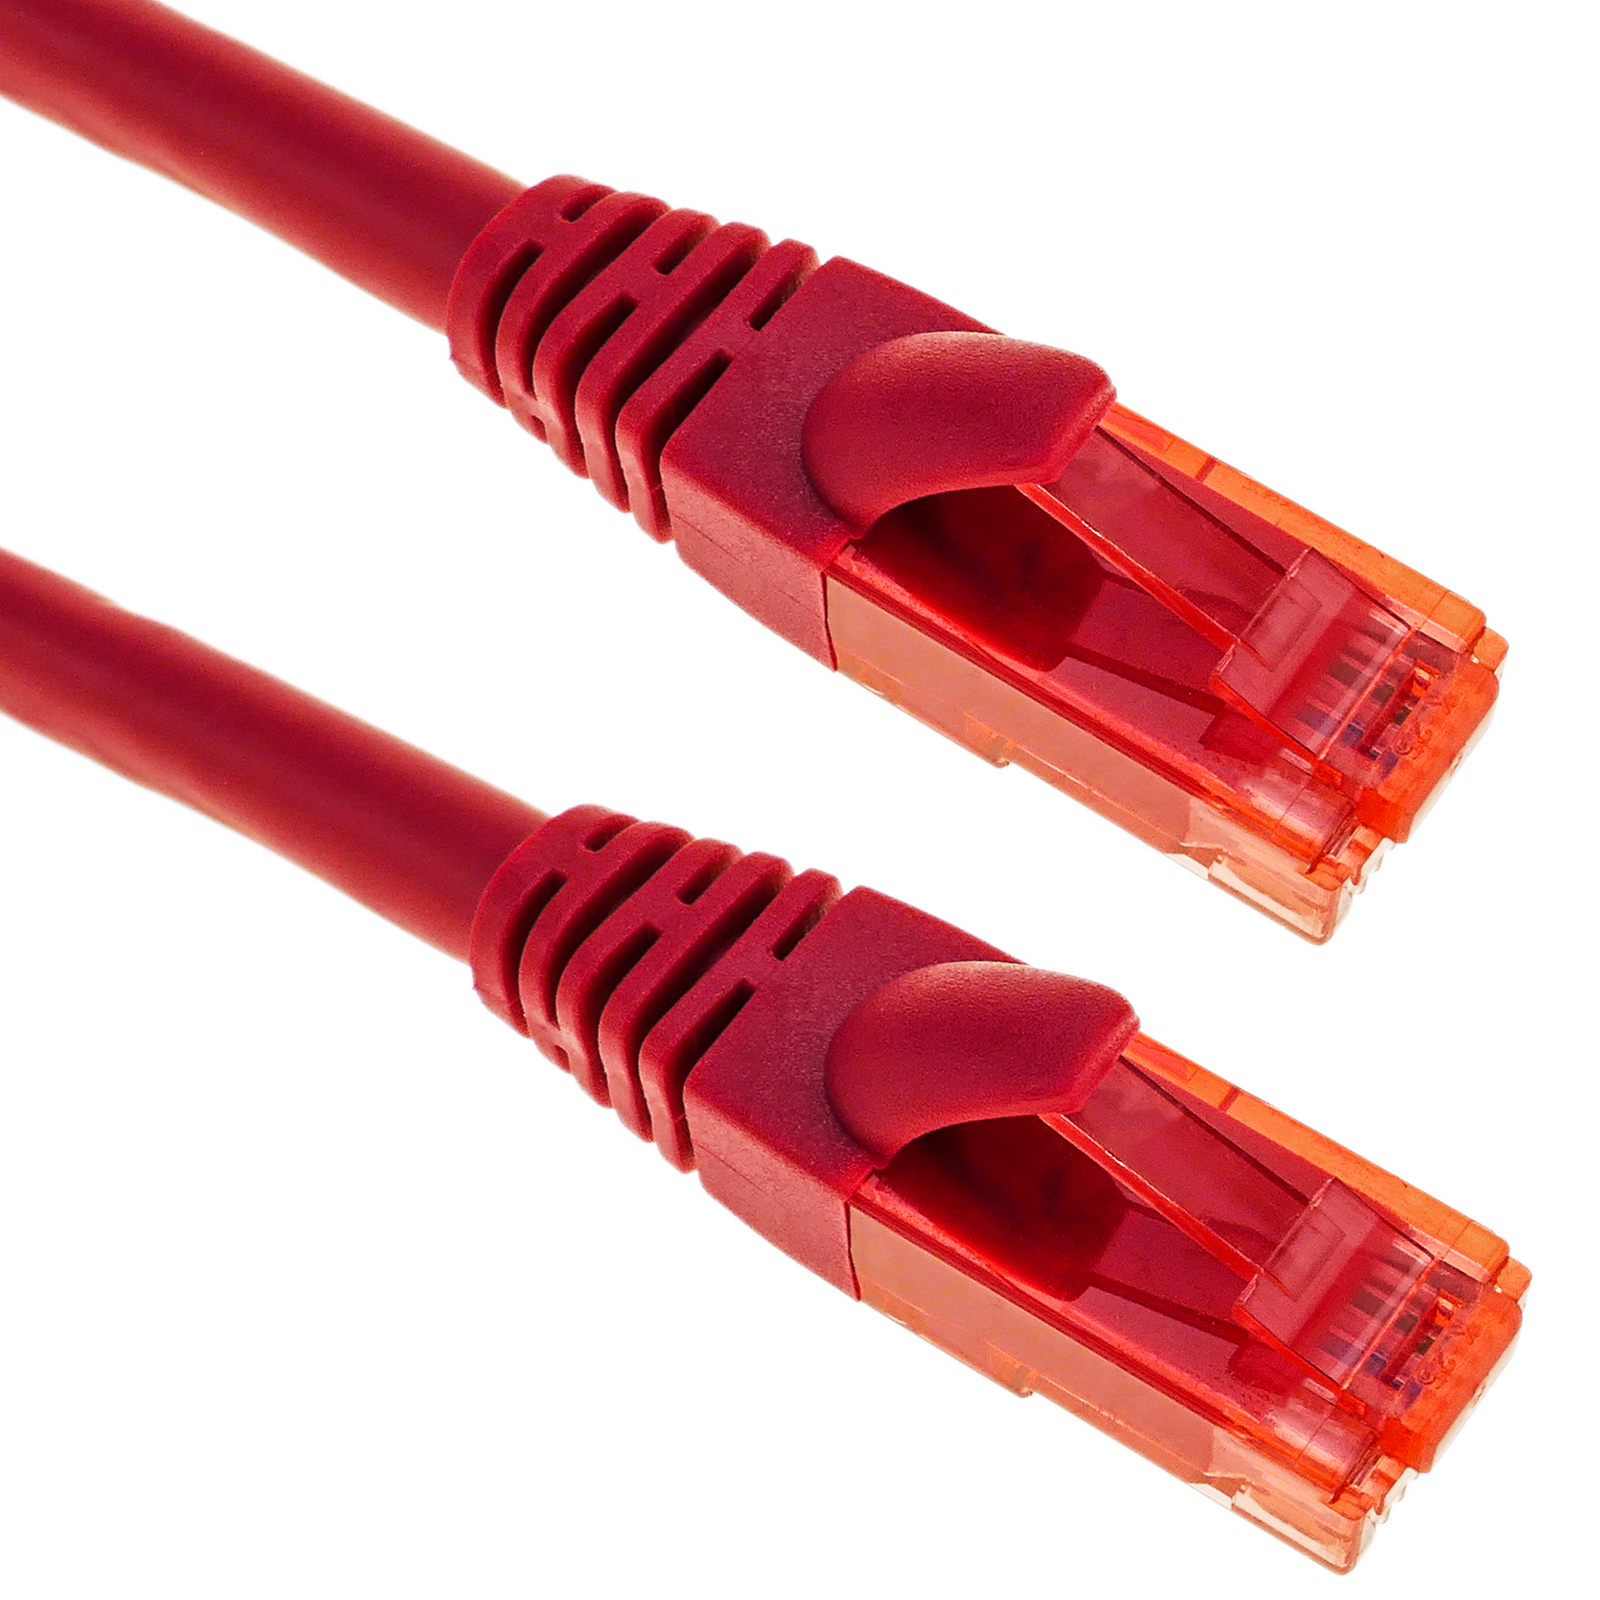 Cable de Red LSHF UTP con Conector RJ45 Cat. 6 gris de 25 cm